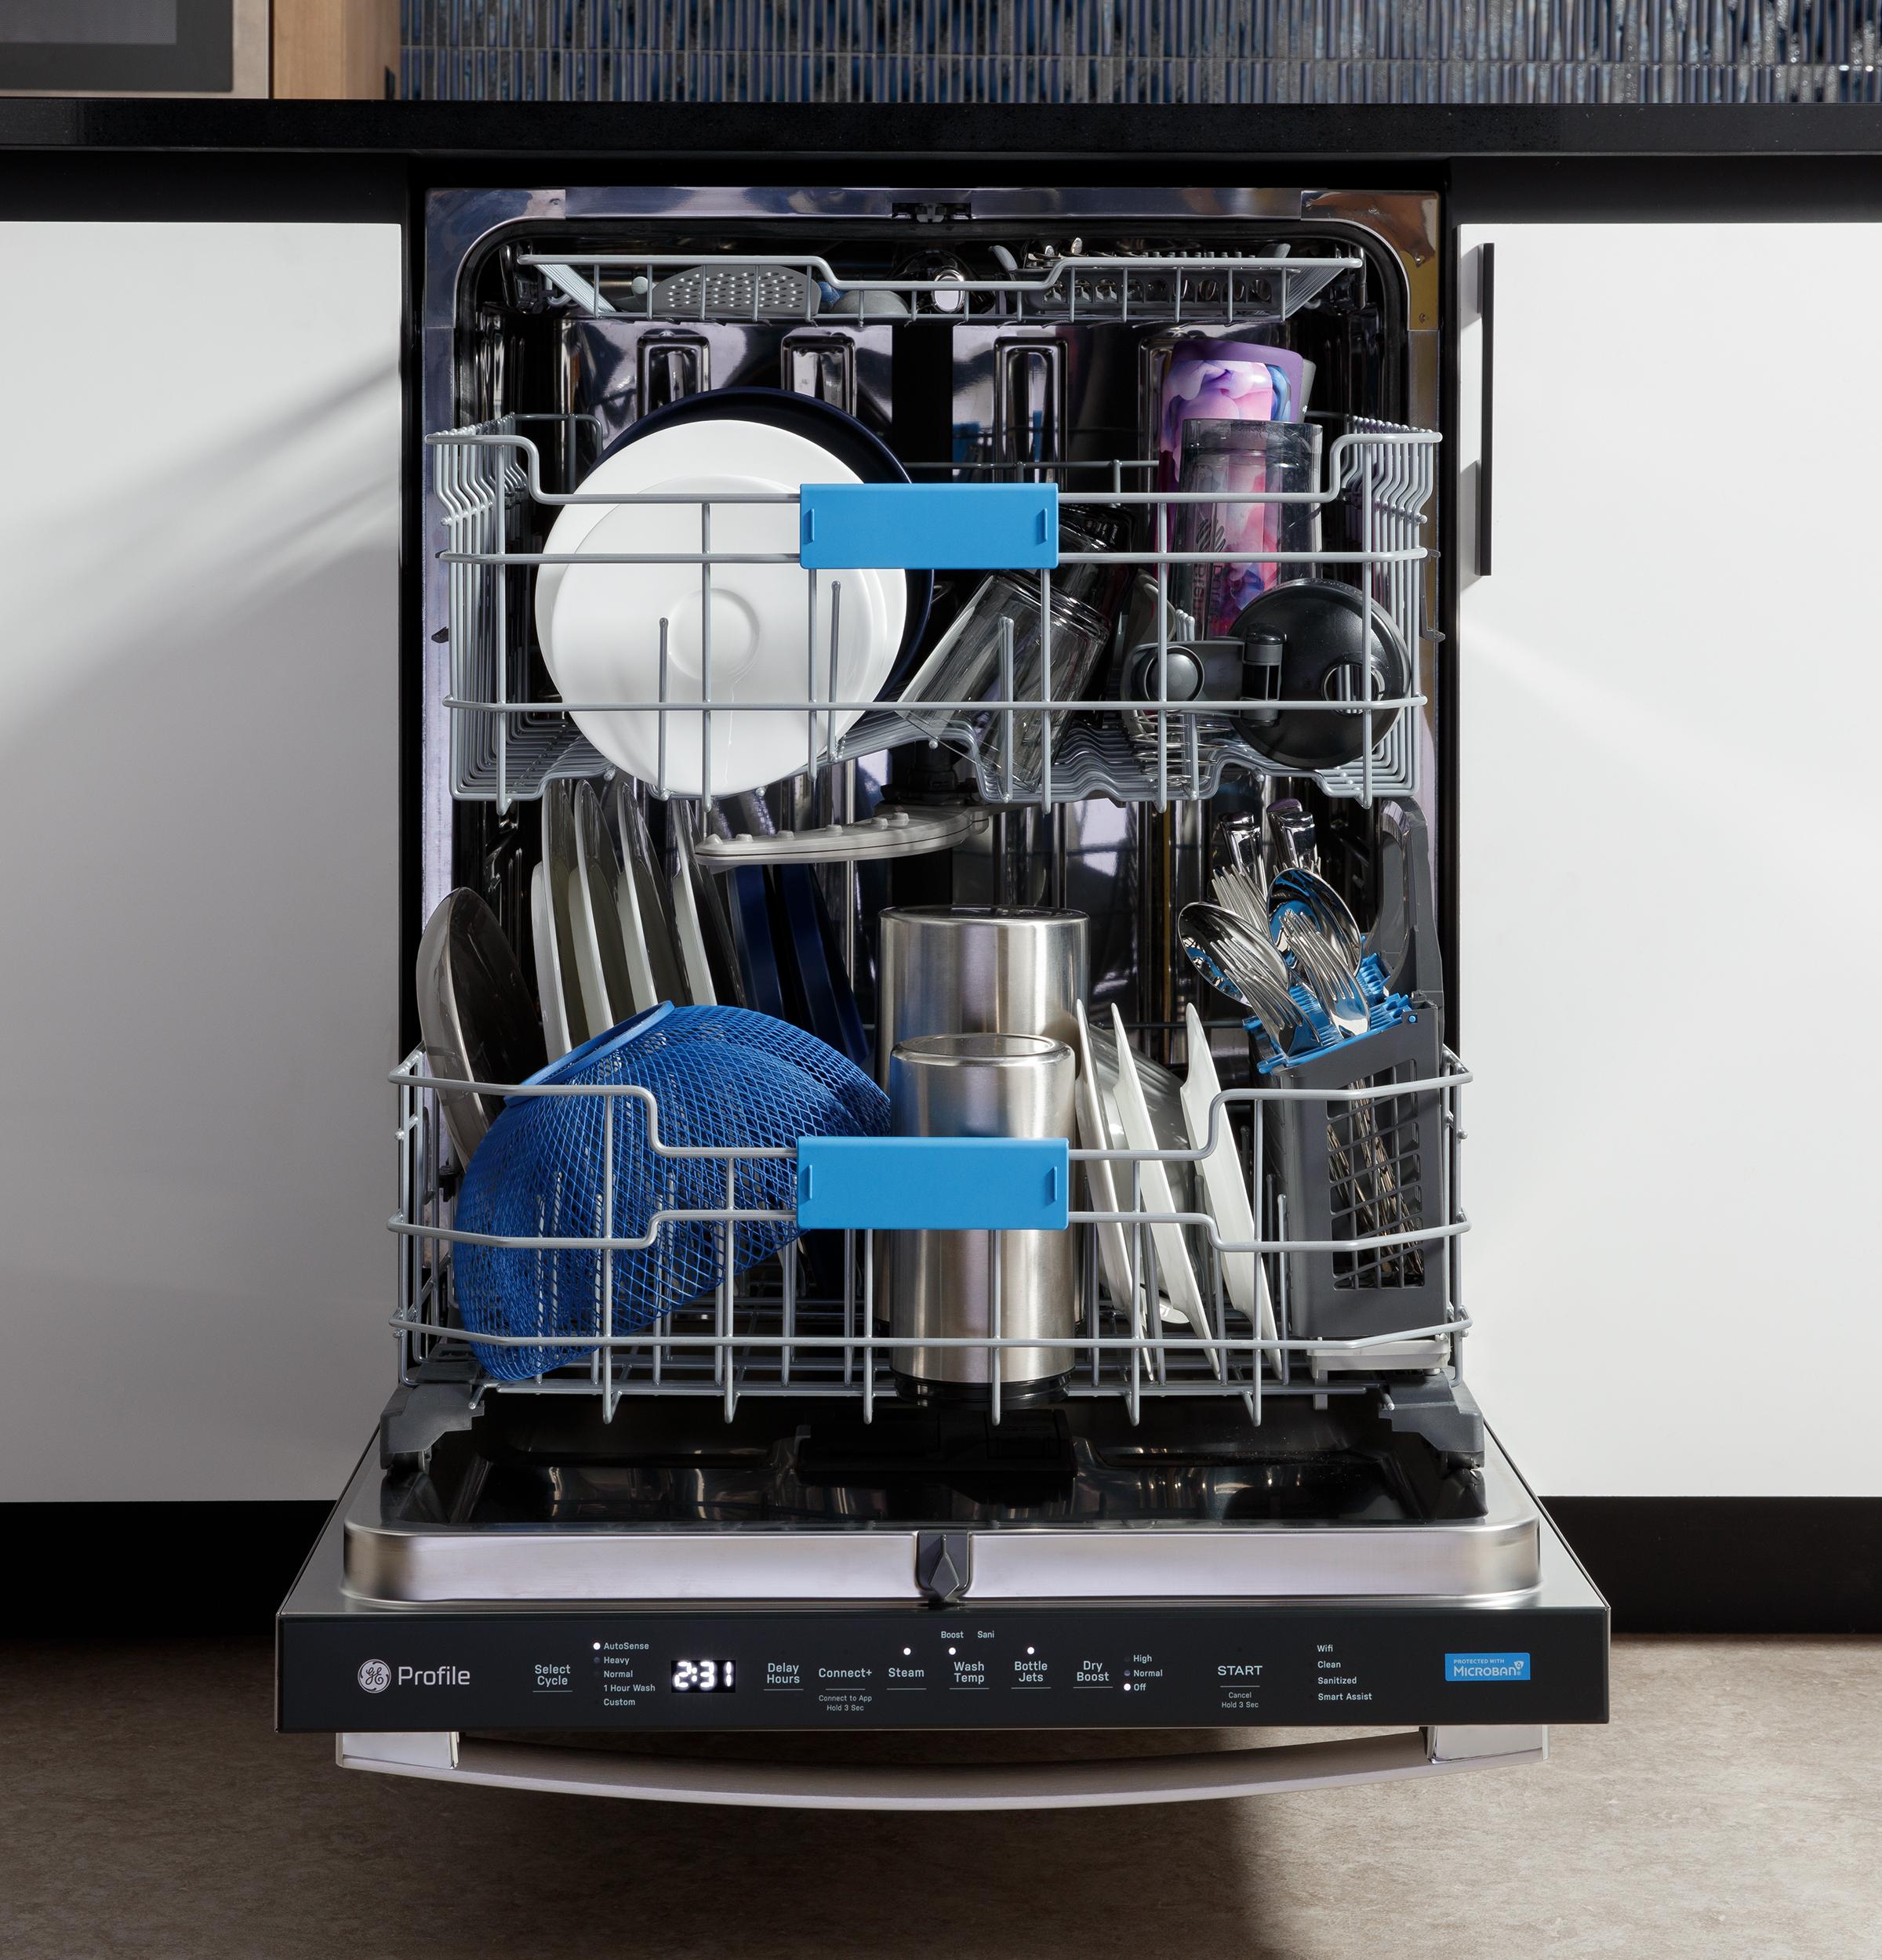 GE dishwasher part? : r/Appliances